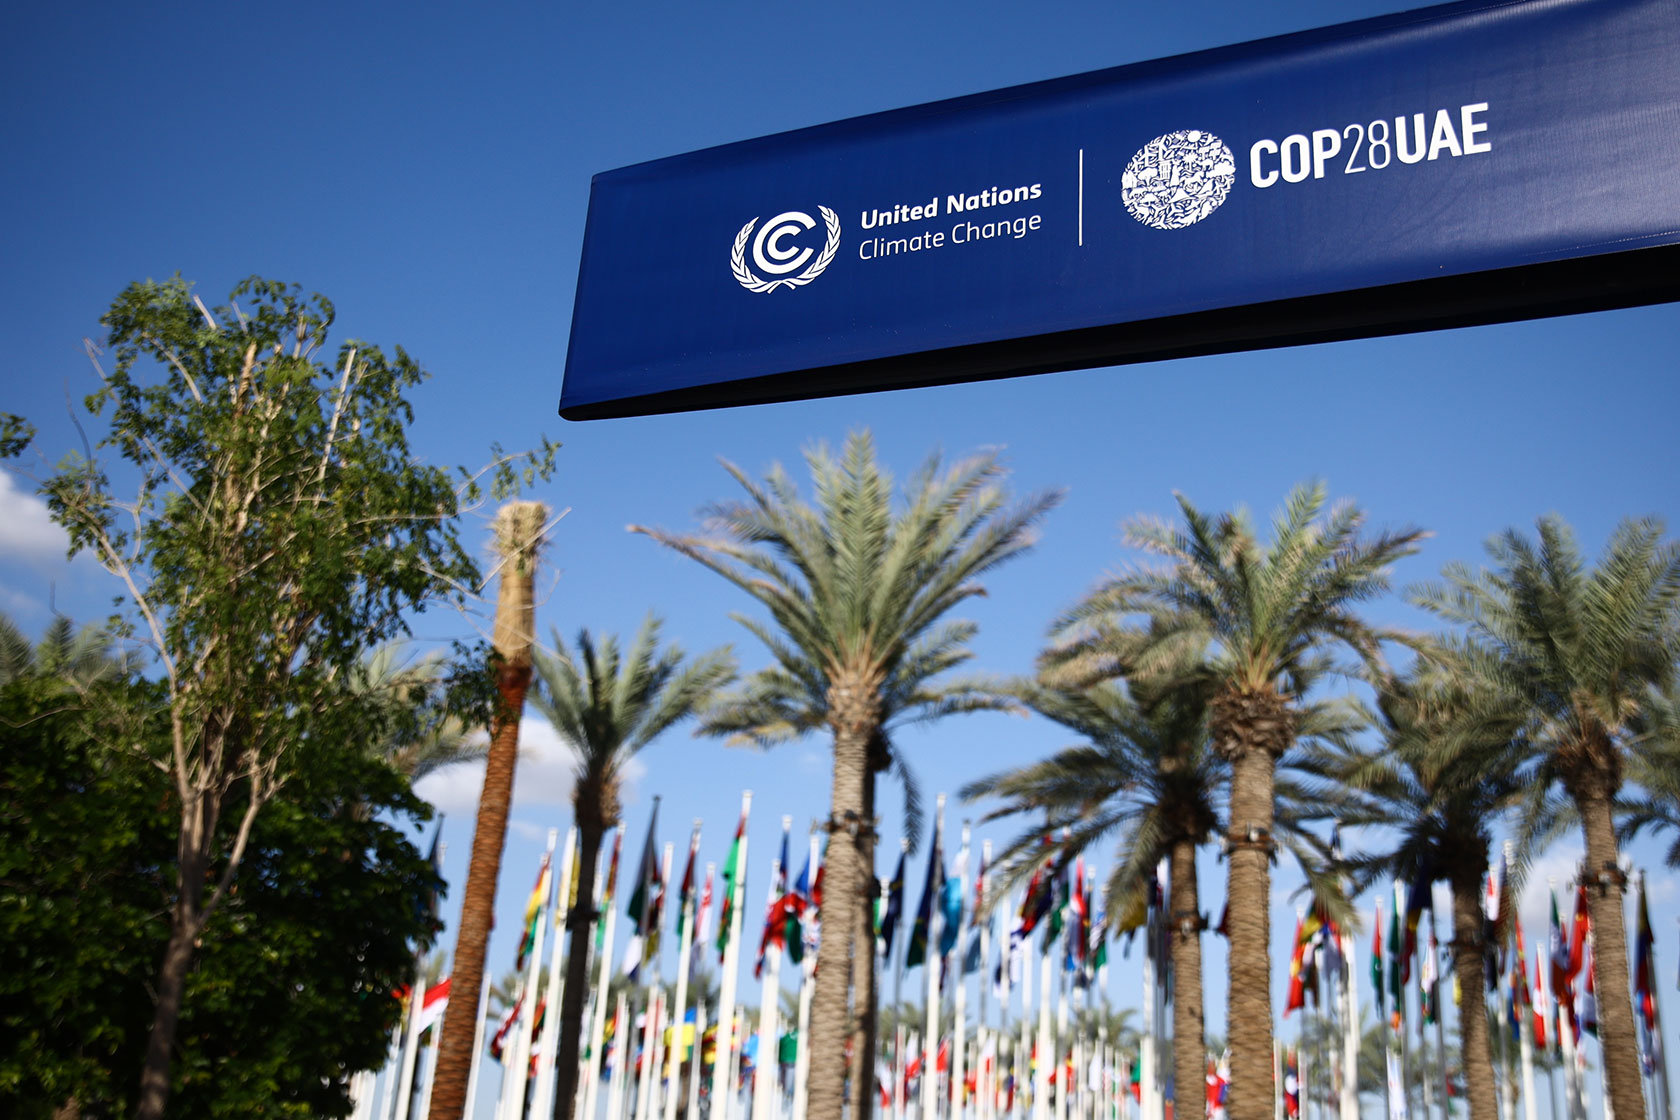 The COP28 logo is seen in Dubai.